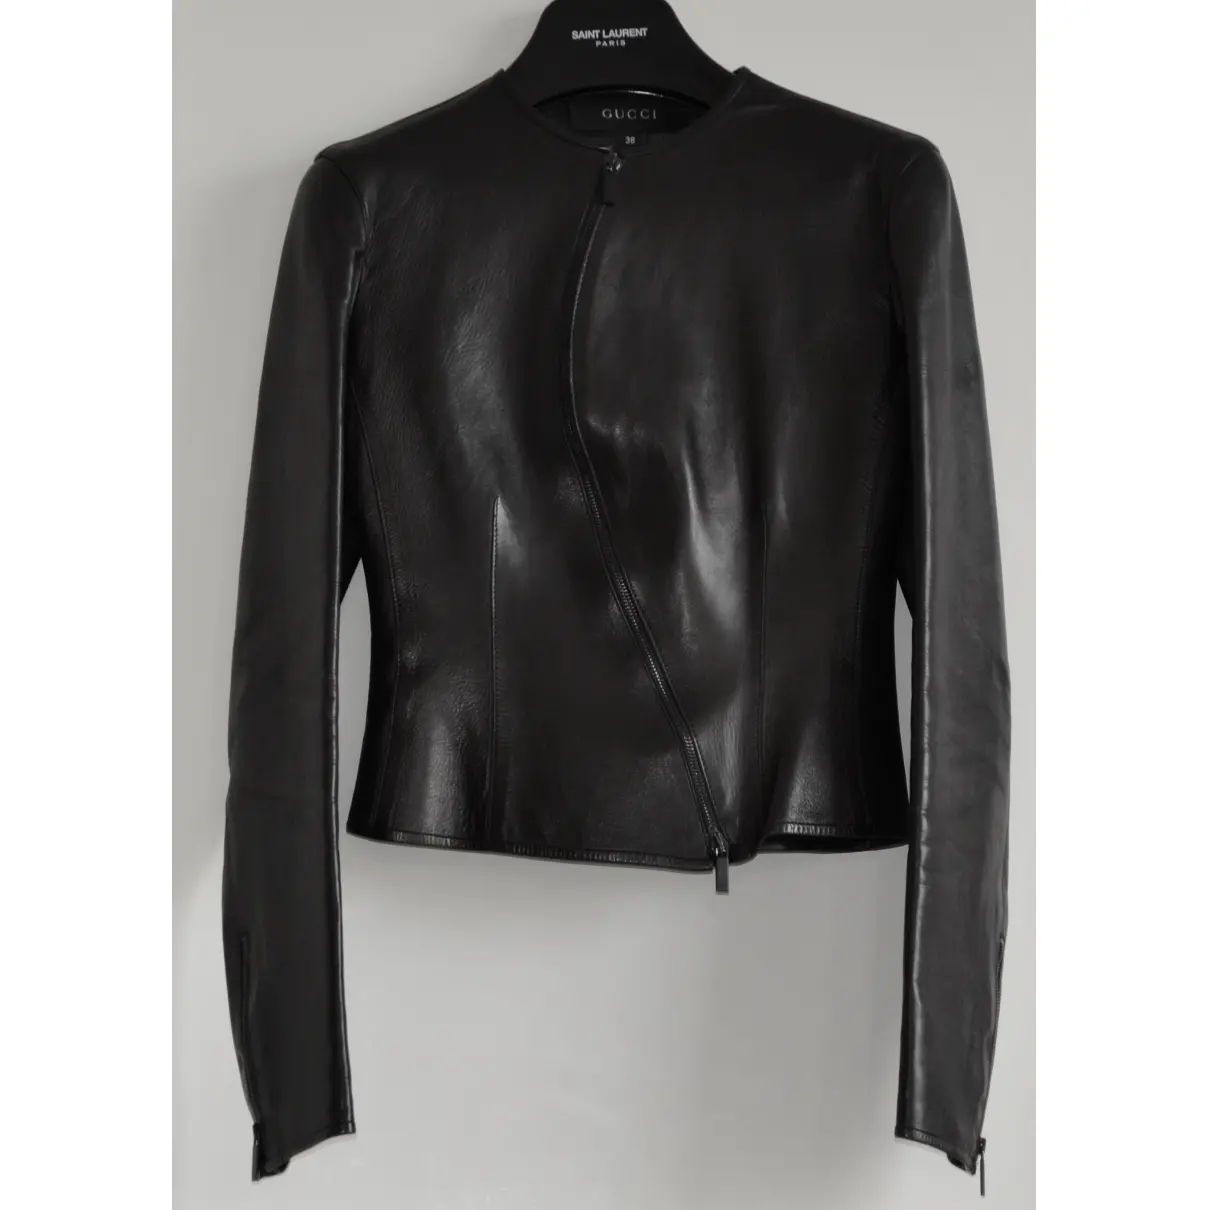 Buy Gucci Leather jacket online - Vintage